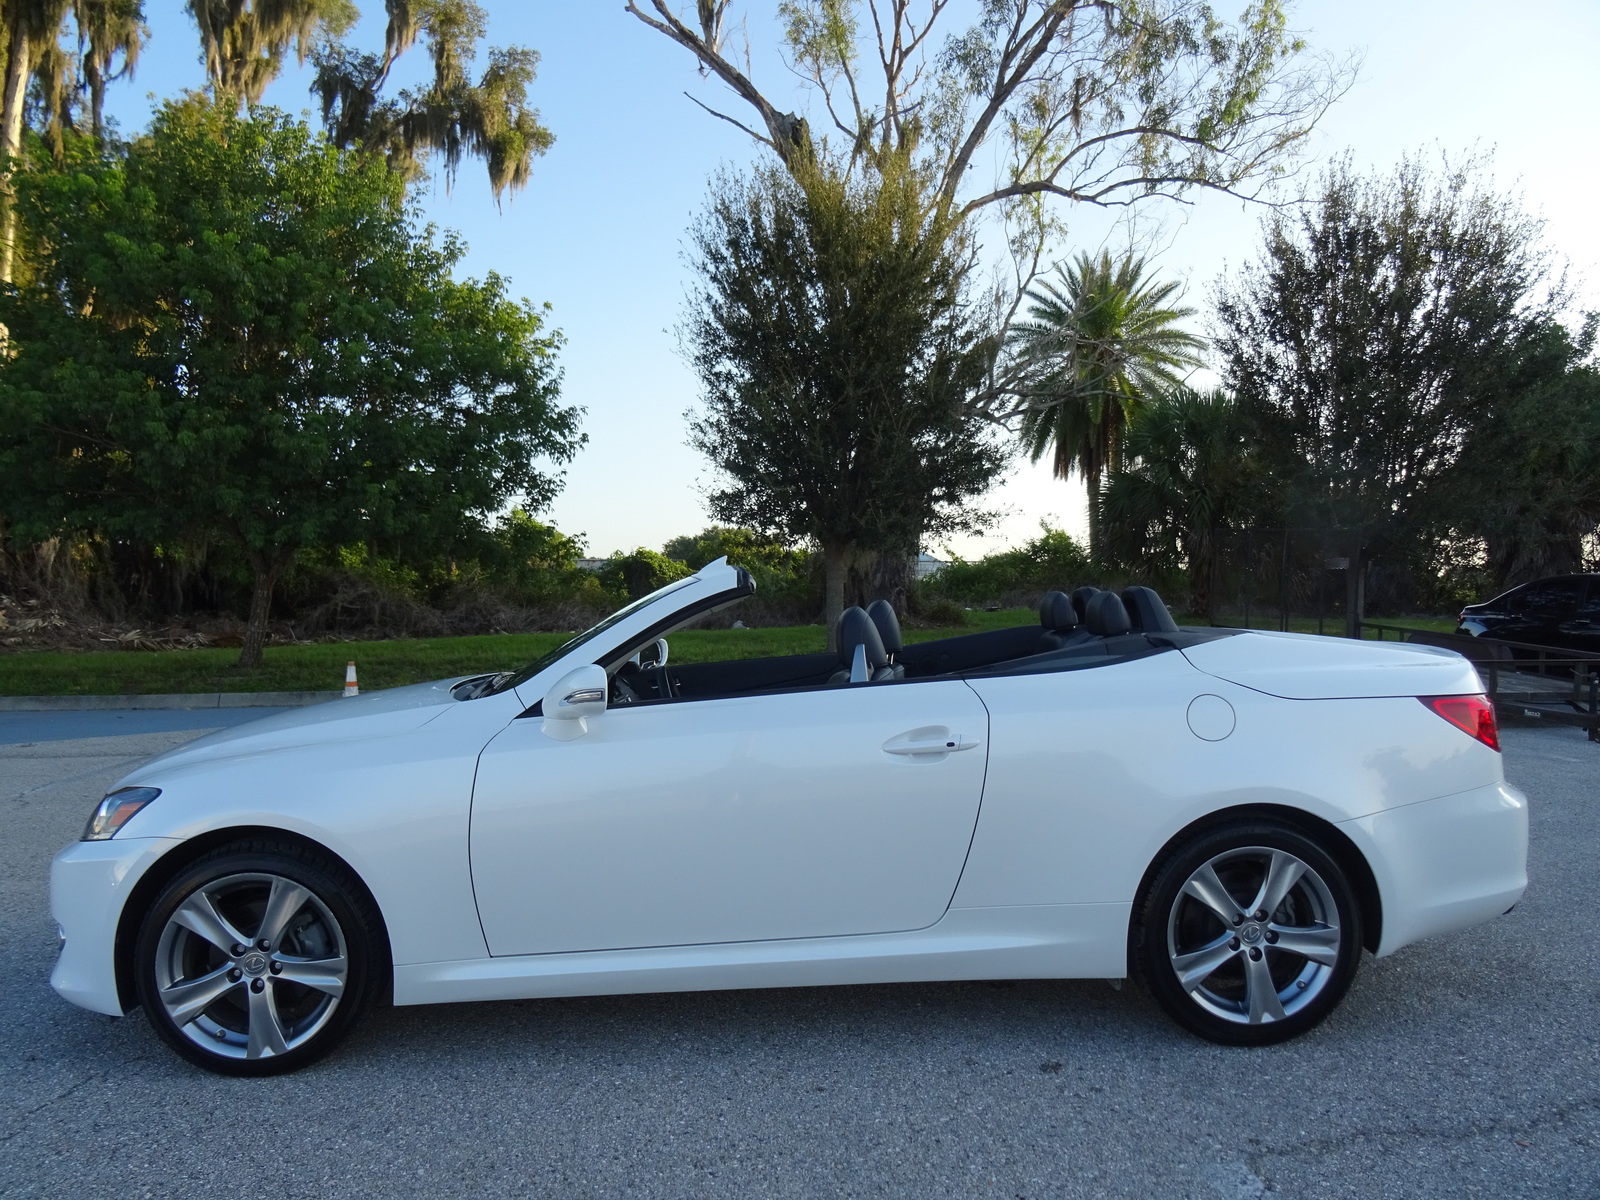 Pre-Owned 2013 Lexus IS 250C Convertible in Sarasota #LP11643 | Wilde ...